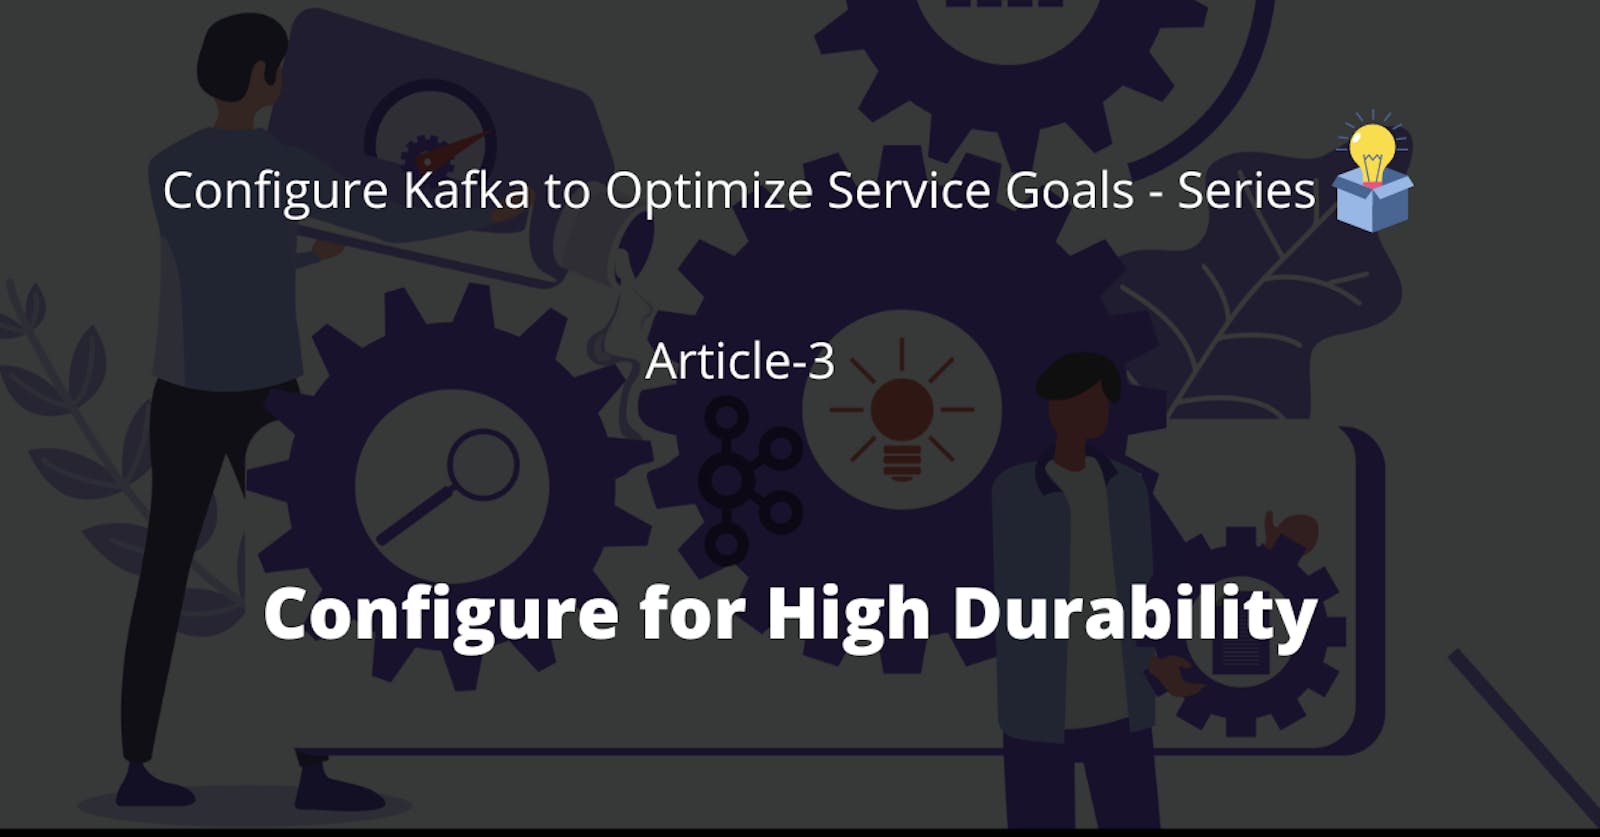 Configure Kafka for High Durability